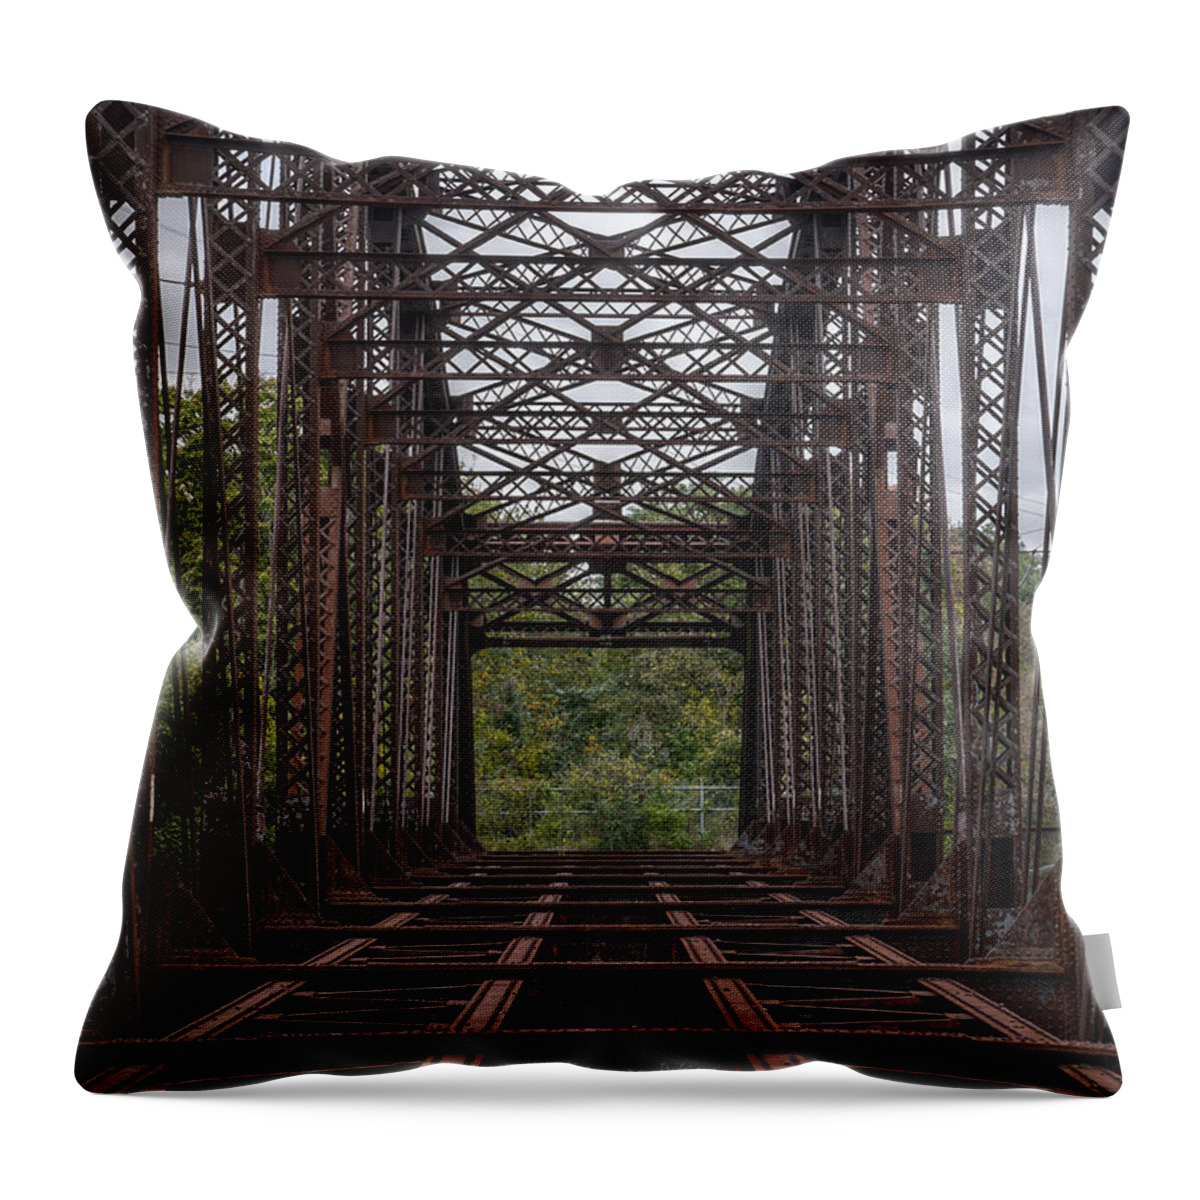 Bridge Throw Pillow featuring the photograph Whitford Railway Truss Bridge by Richard Reeve